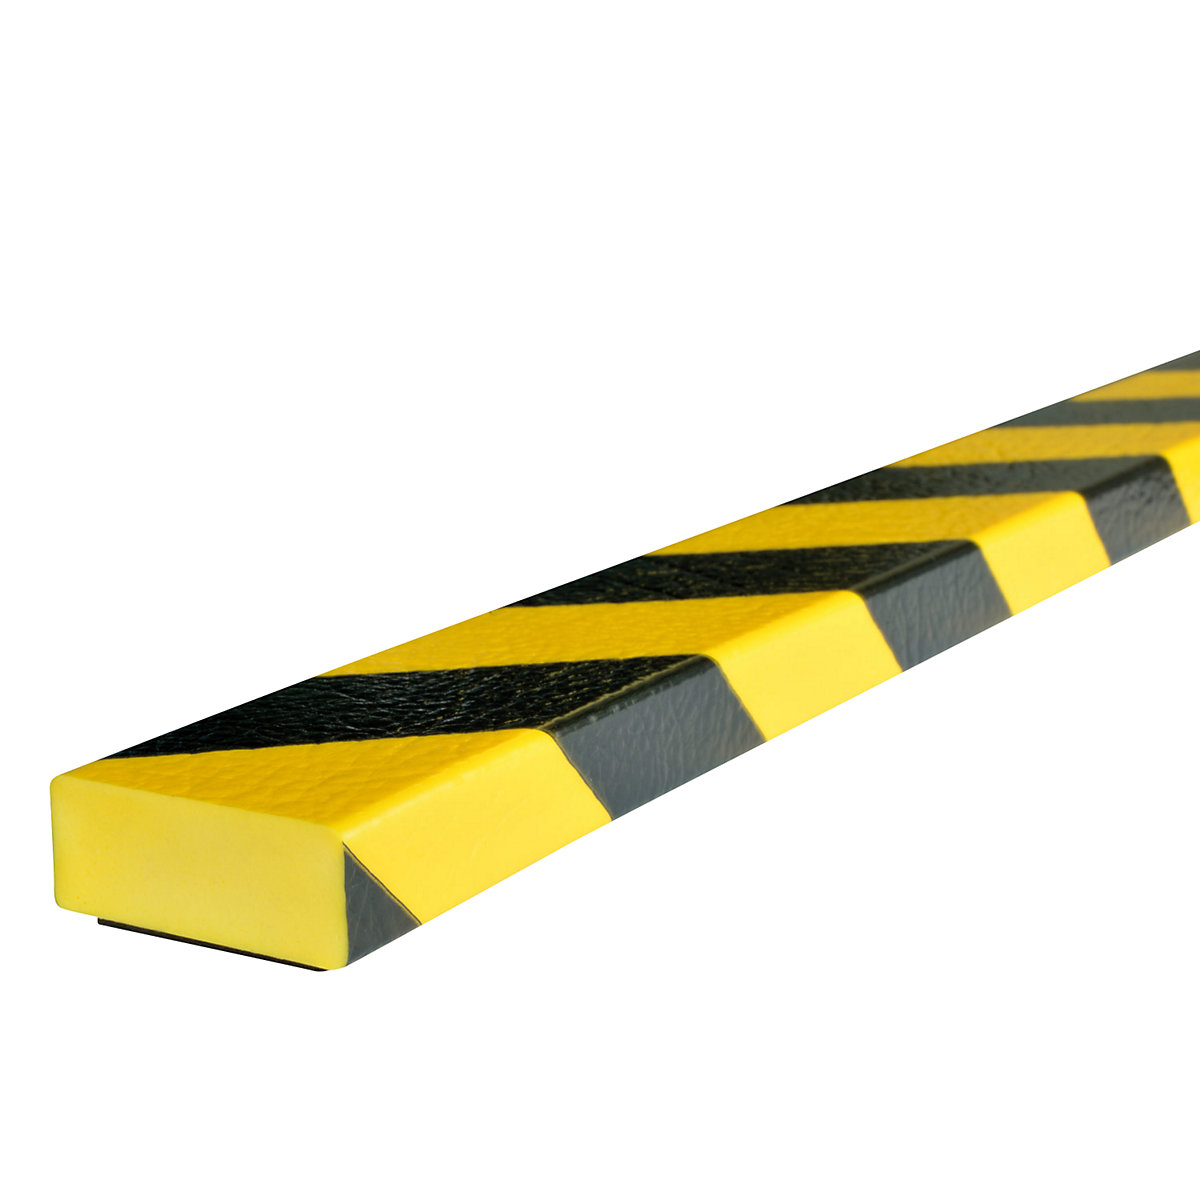 Ochrana plôch Knuffi® – SHG, typ D, 1 m kus, magnet, žltá / čierna-17